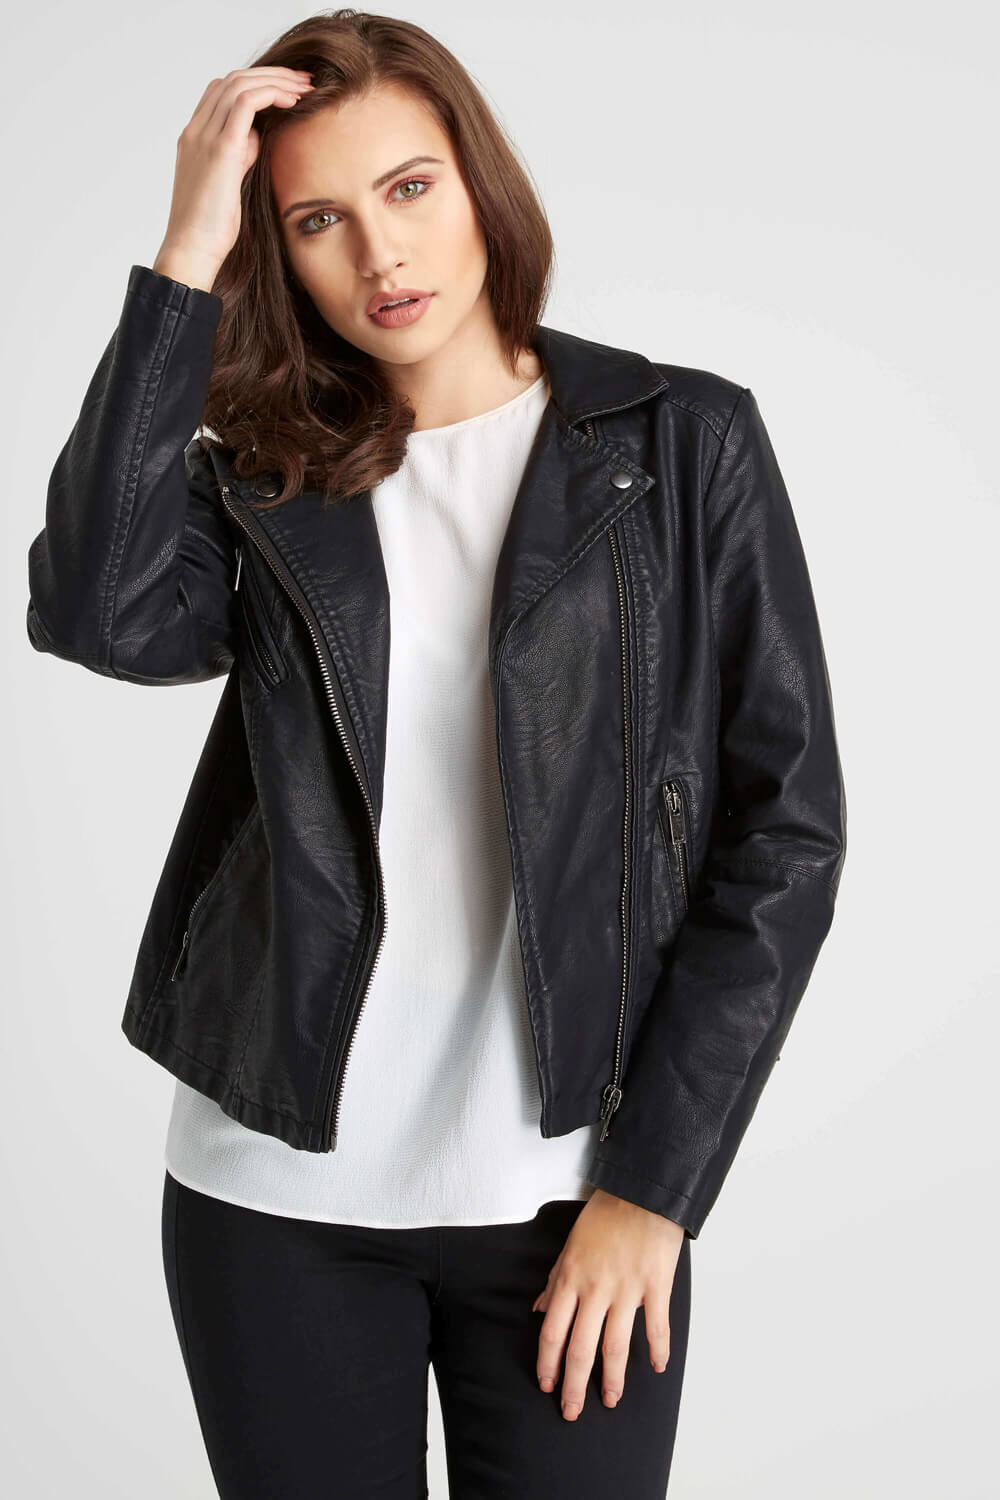 romans leather jacket